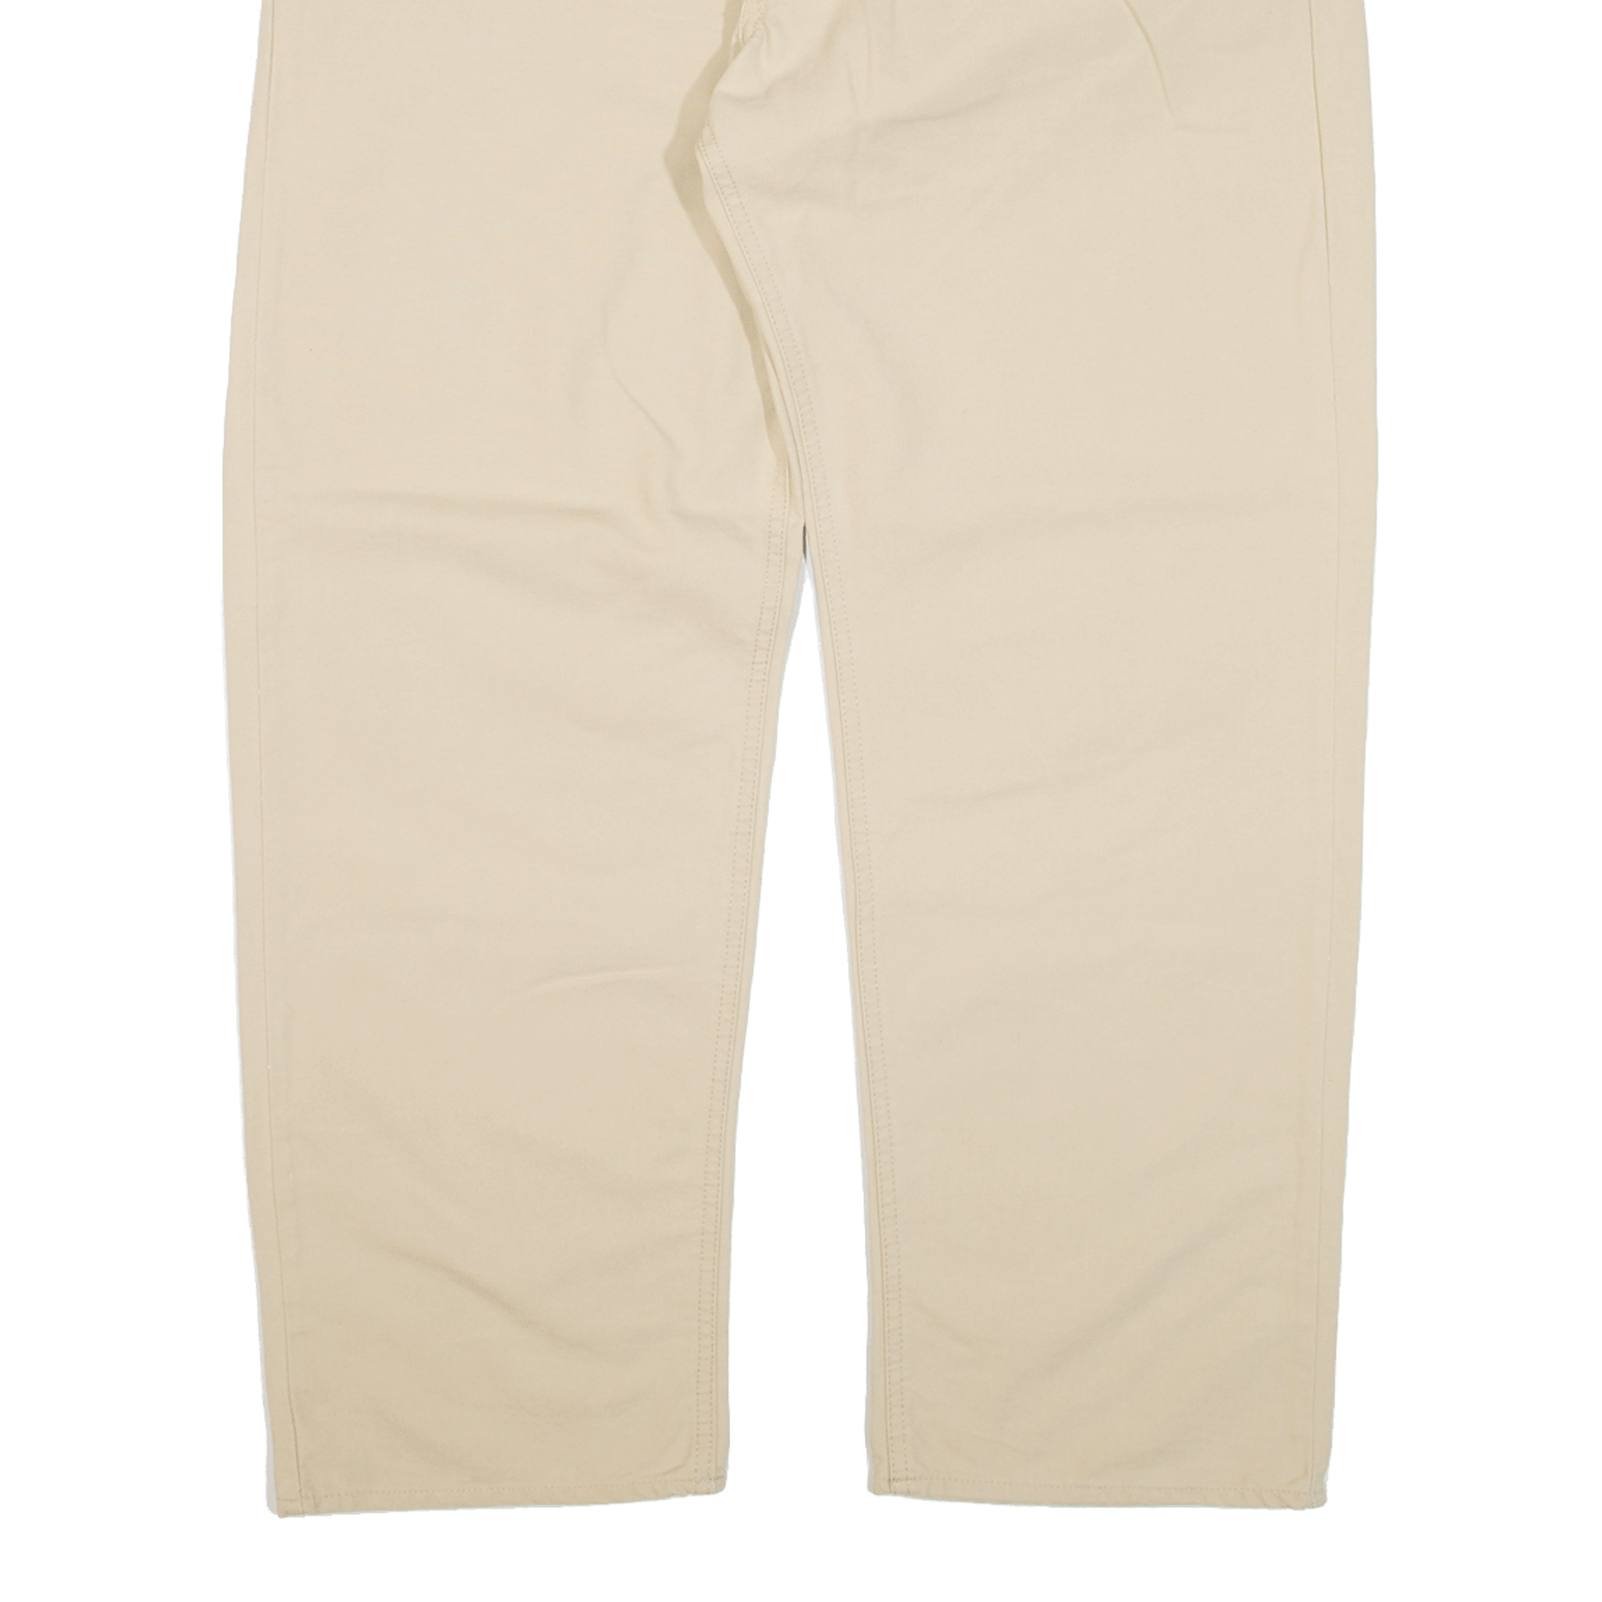 Vintage marlboro pants classic - Gem